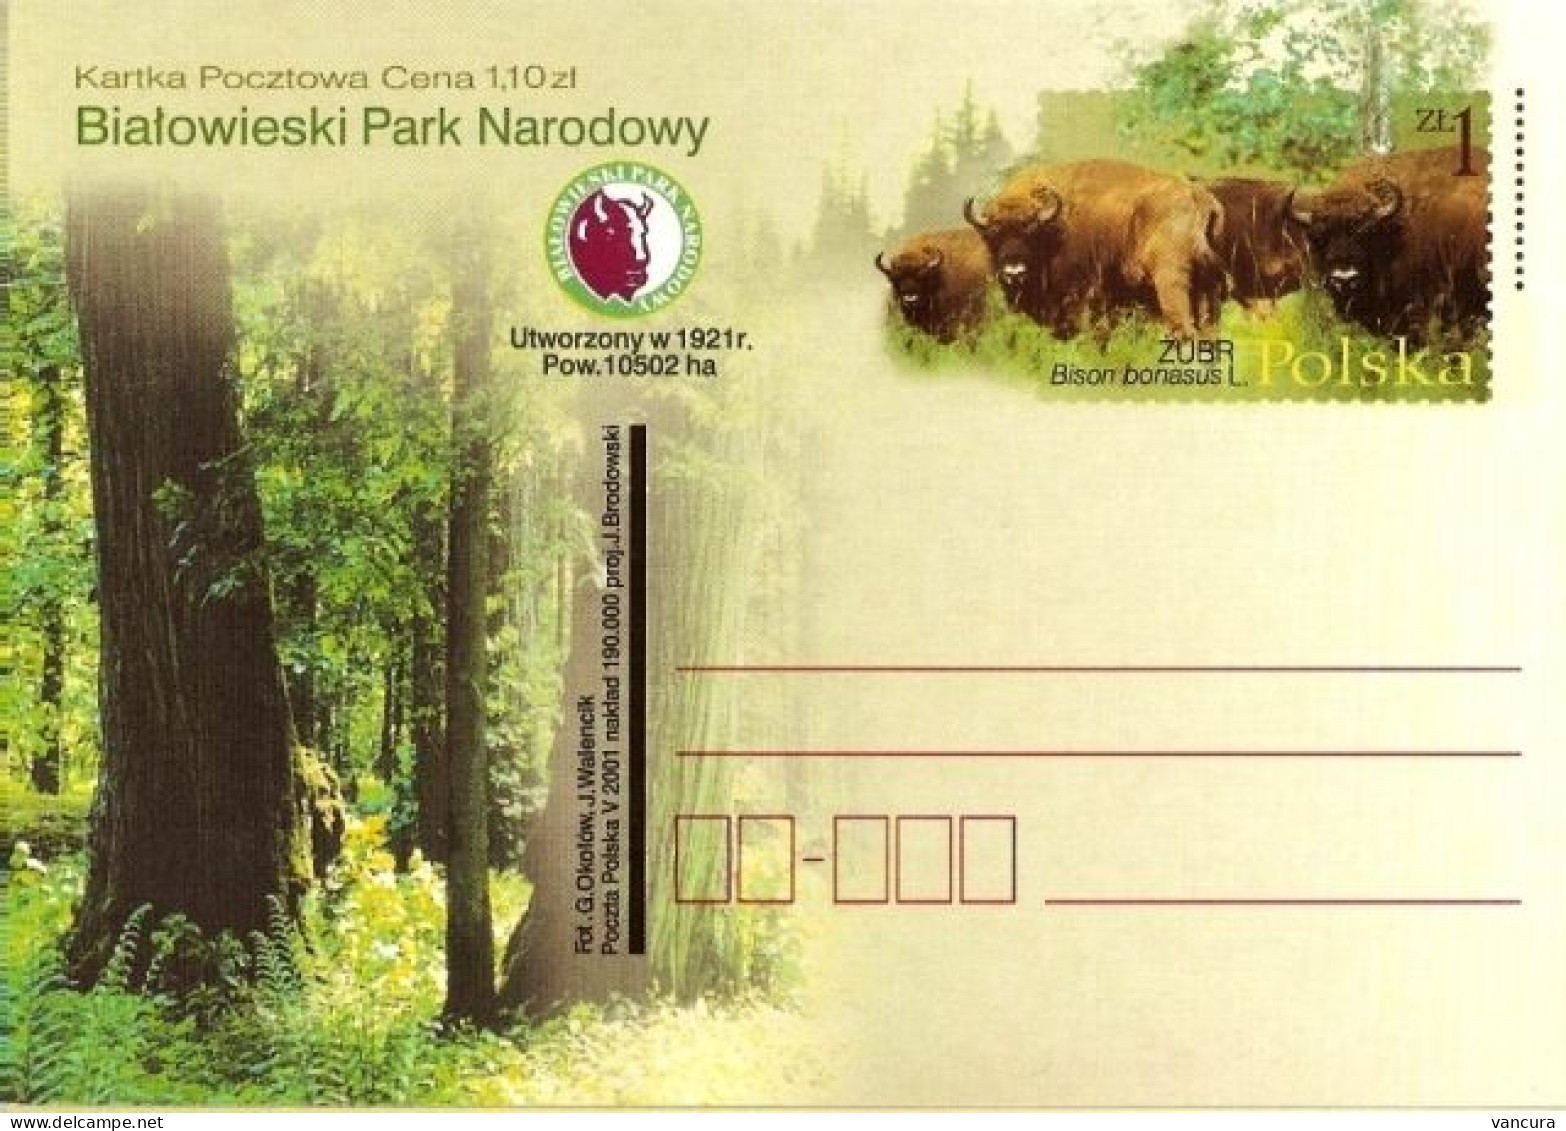 Cp 1260 Poland Bialowieski Park Narodowy Bison Bonasus L. 2001 - Cows